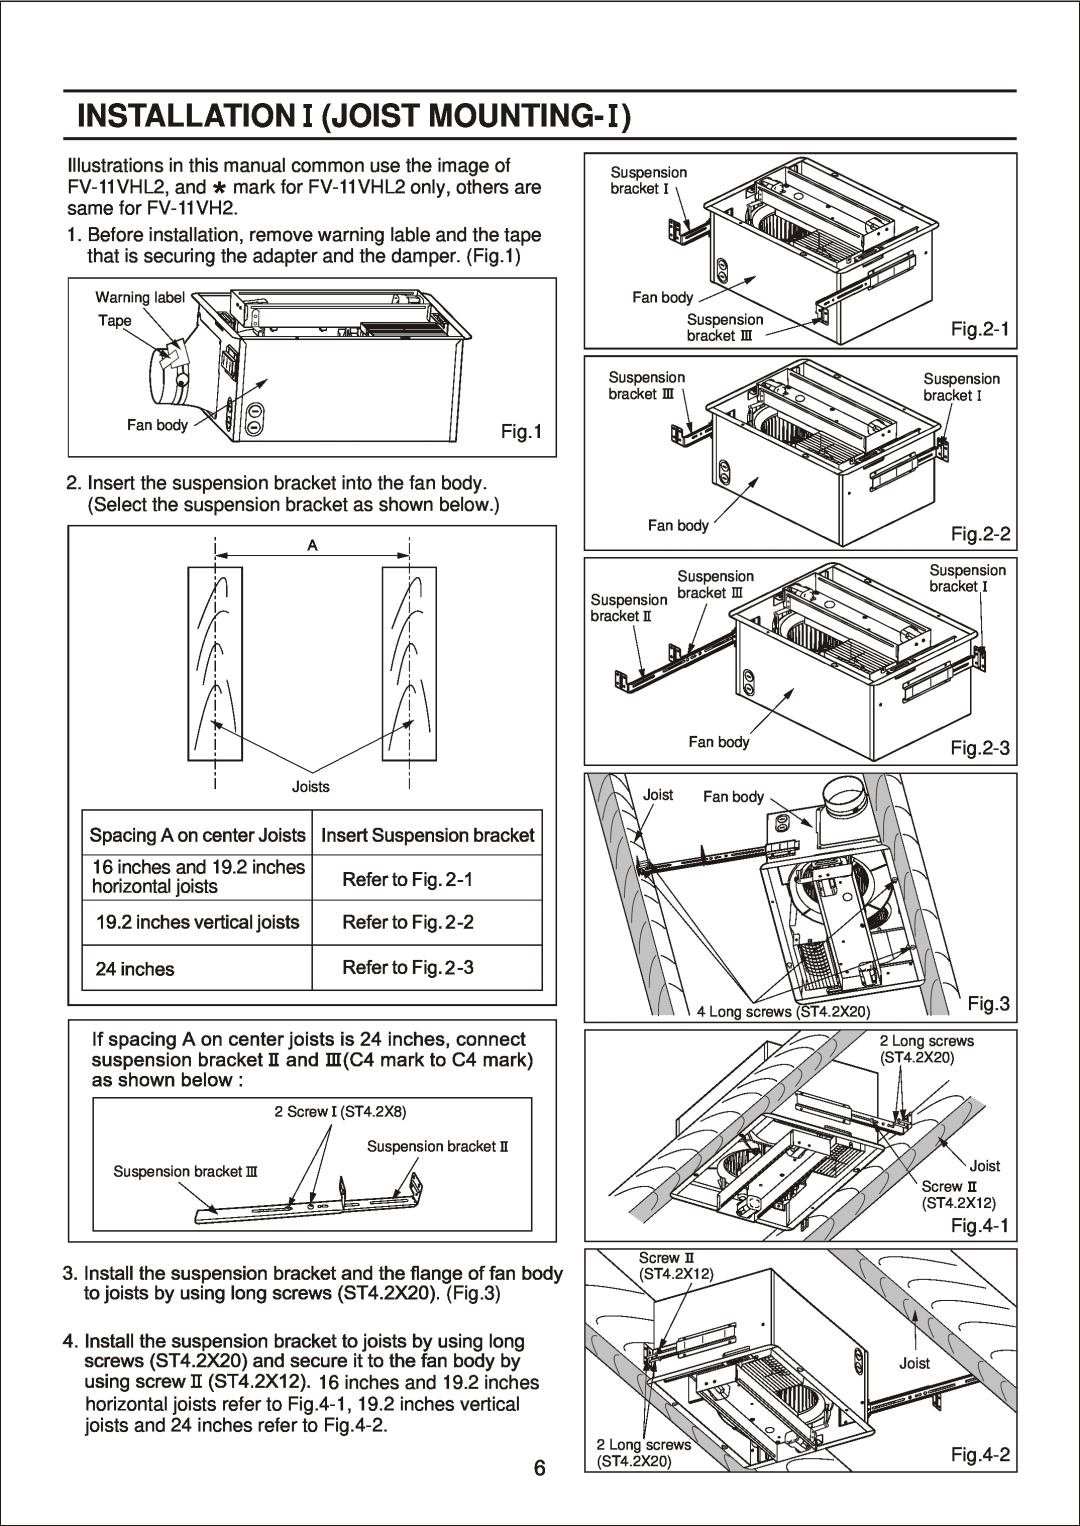 Panasonic FV-11VH2, FV-11VHL2 manual Installation Joist Mounting 